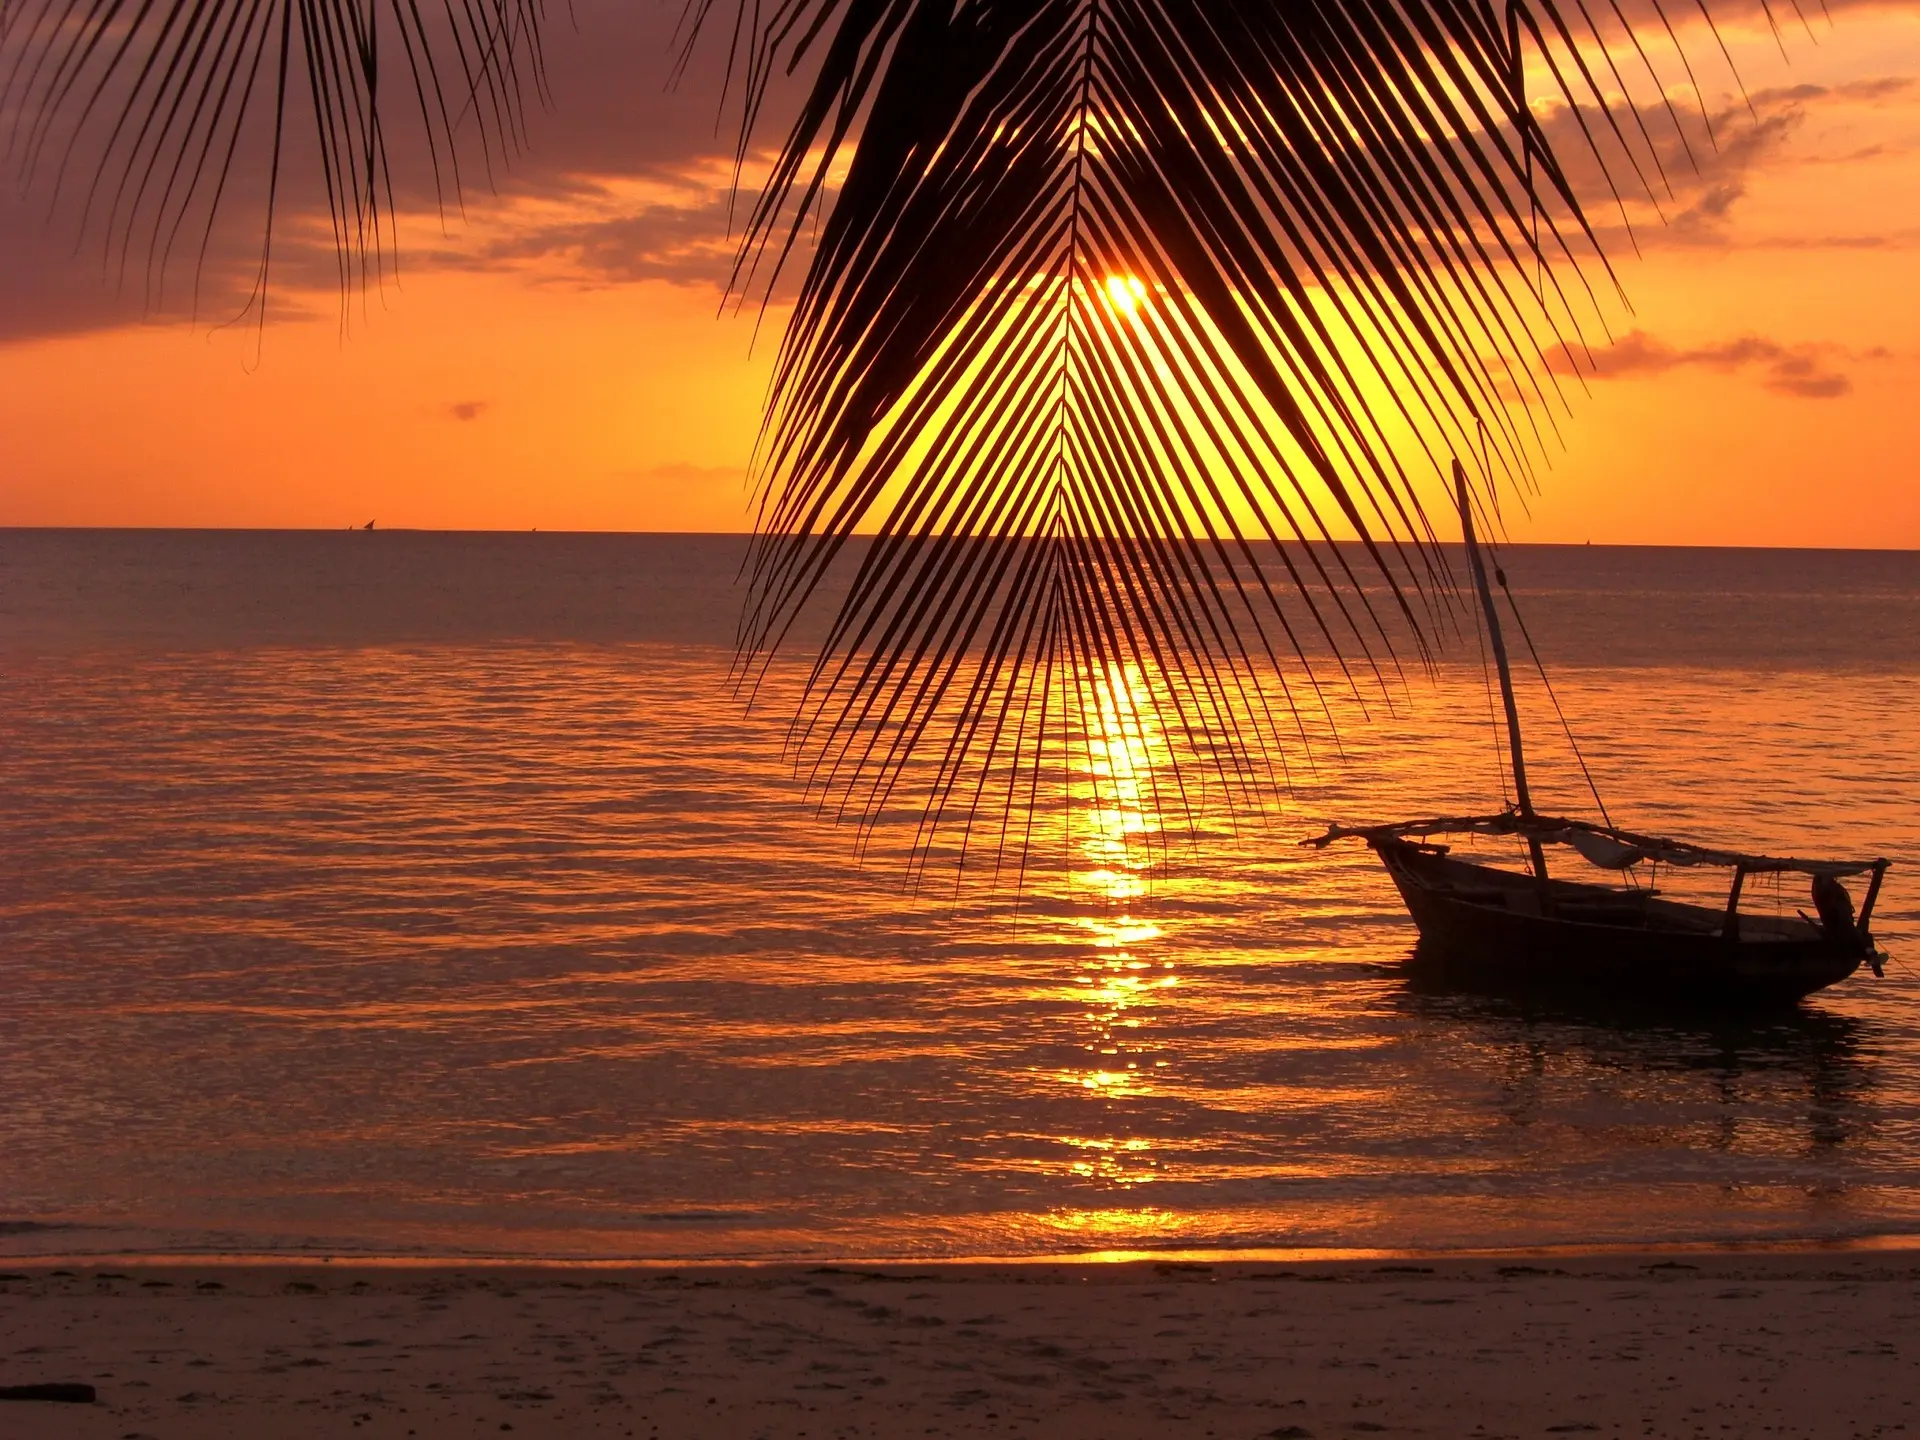 Top things to do in Zanzibar